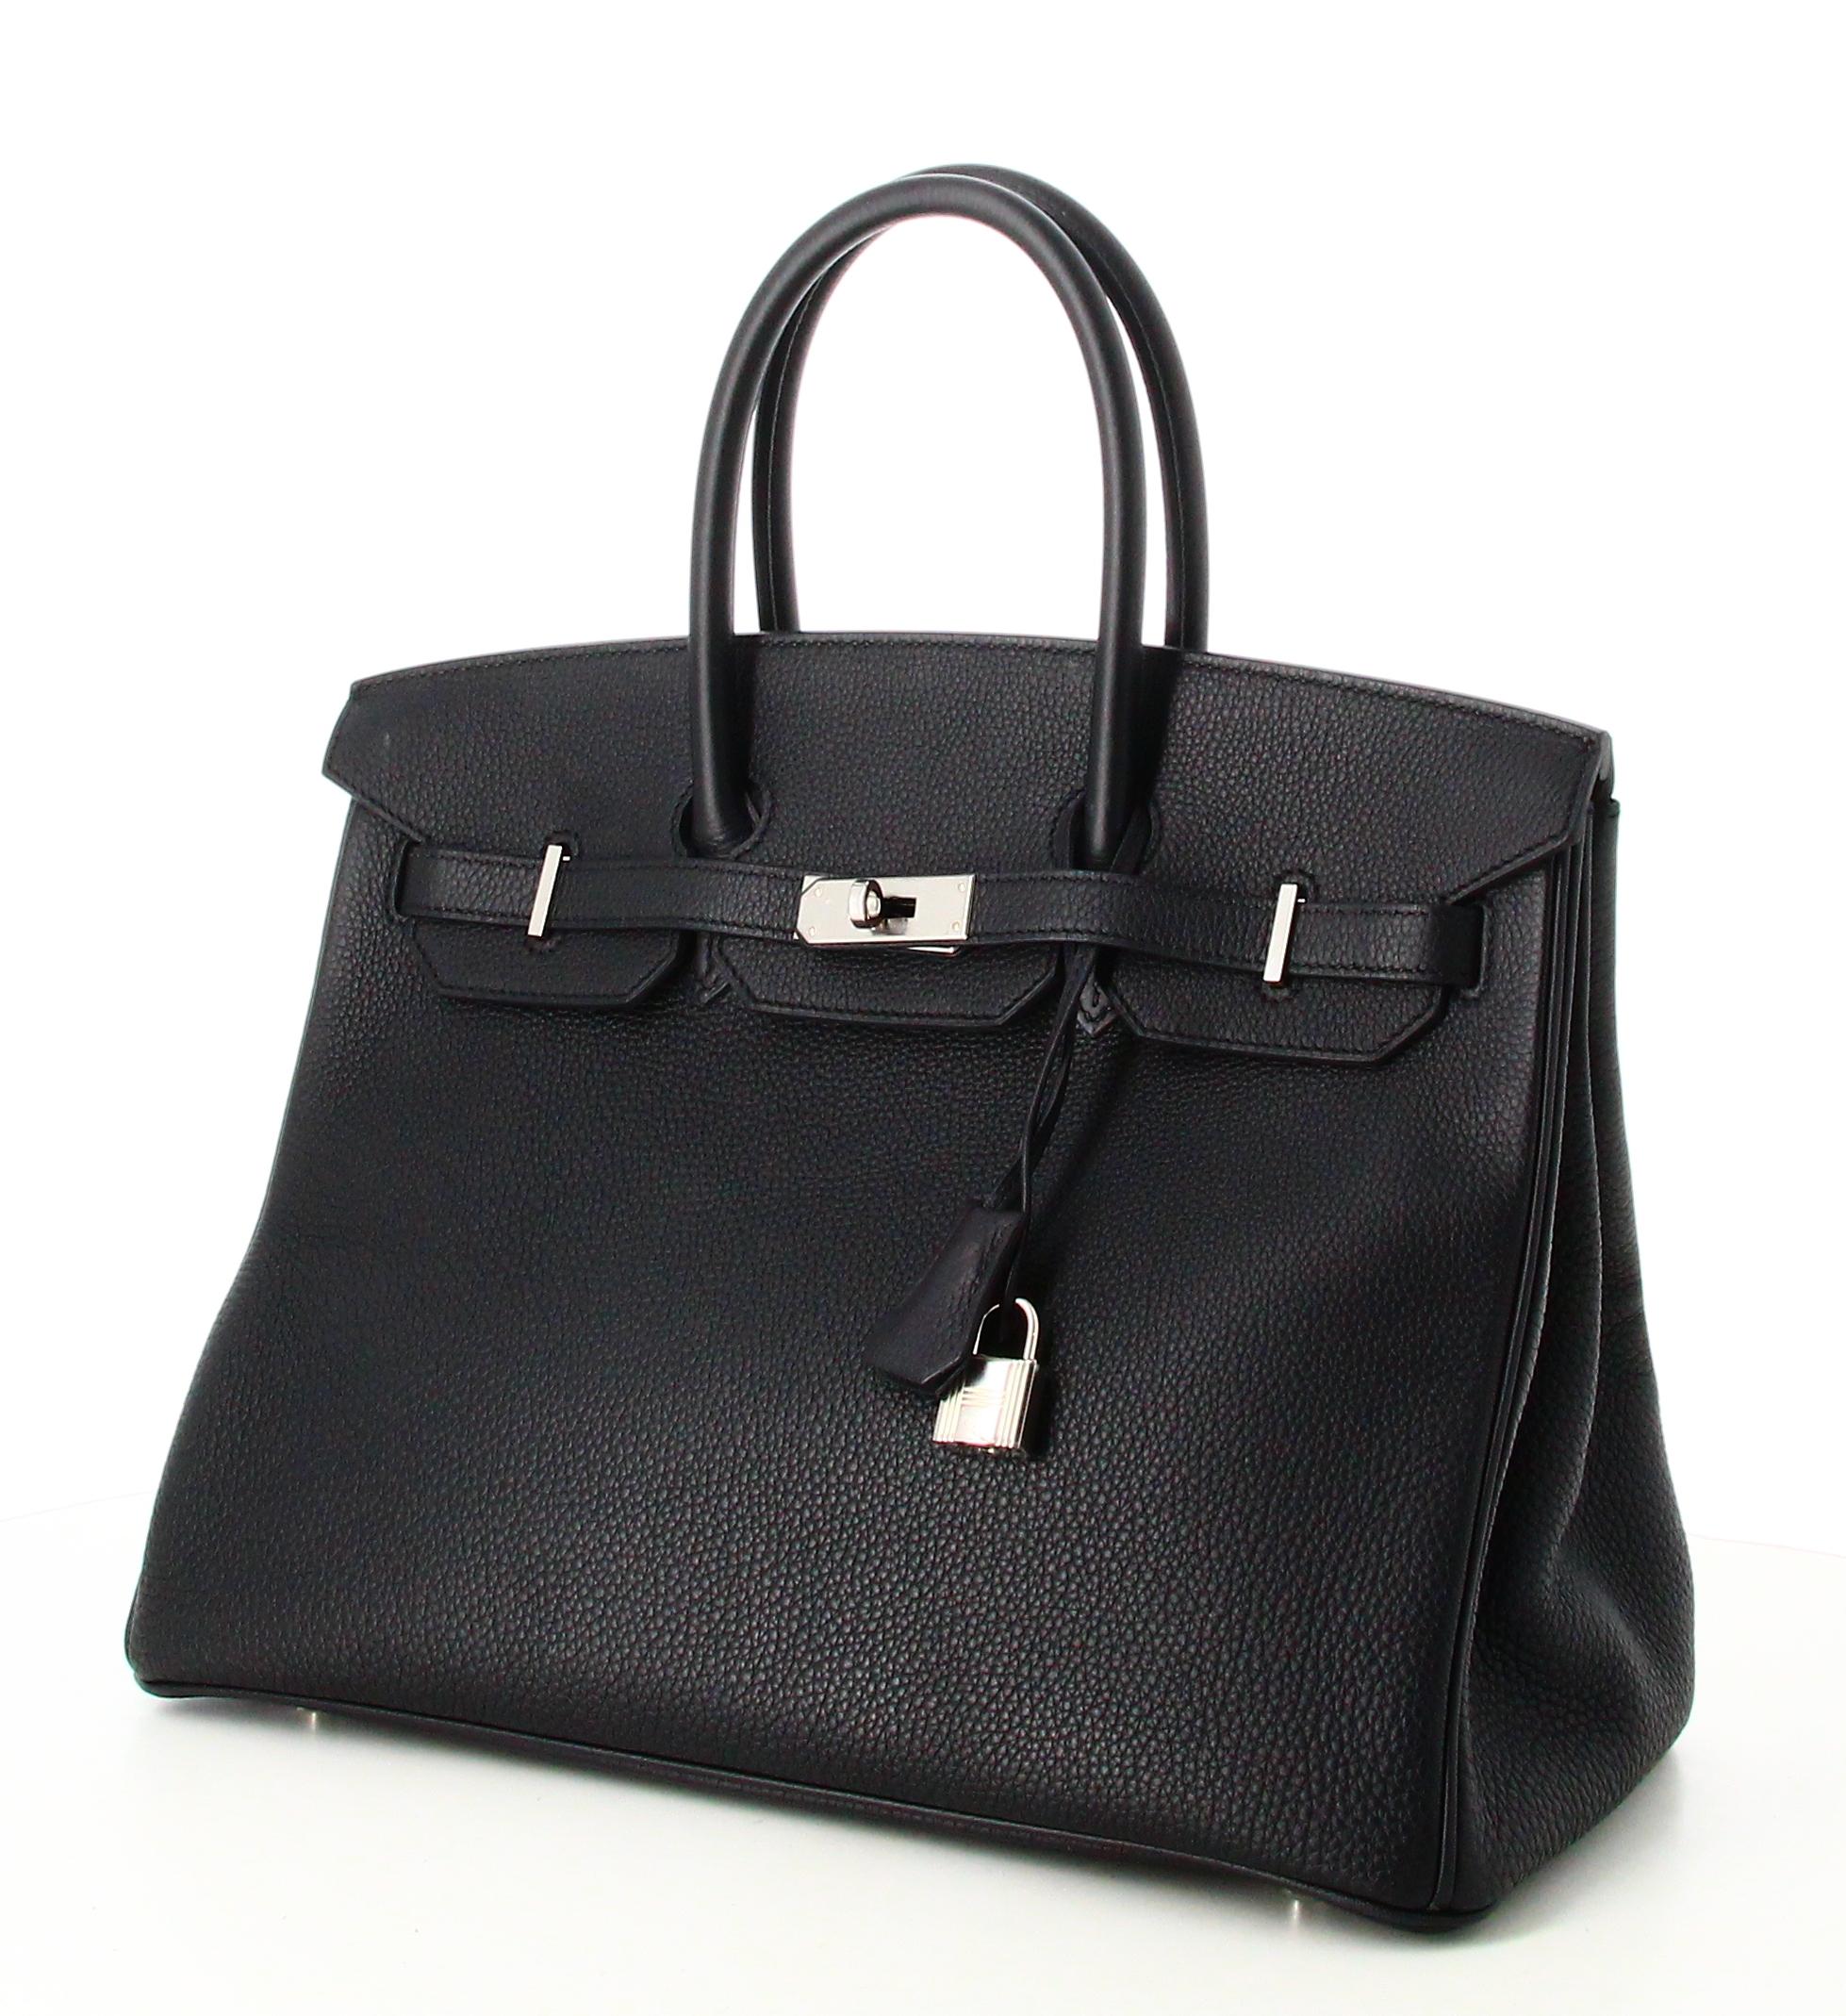 Women's Hermes Black Leather Togo Birkin Bag 35